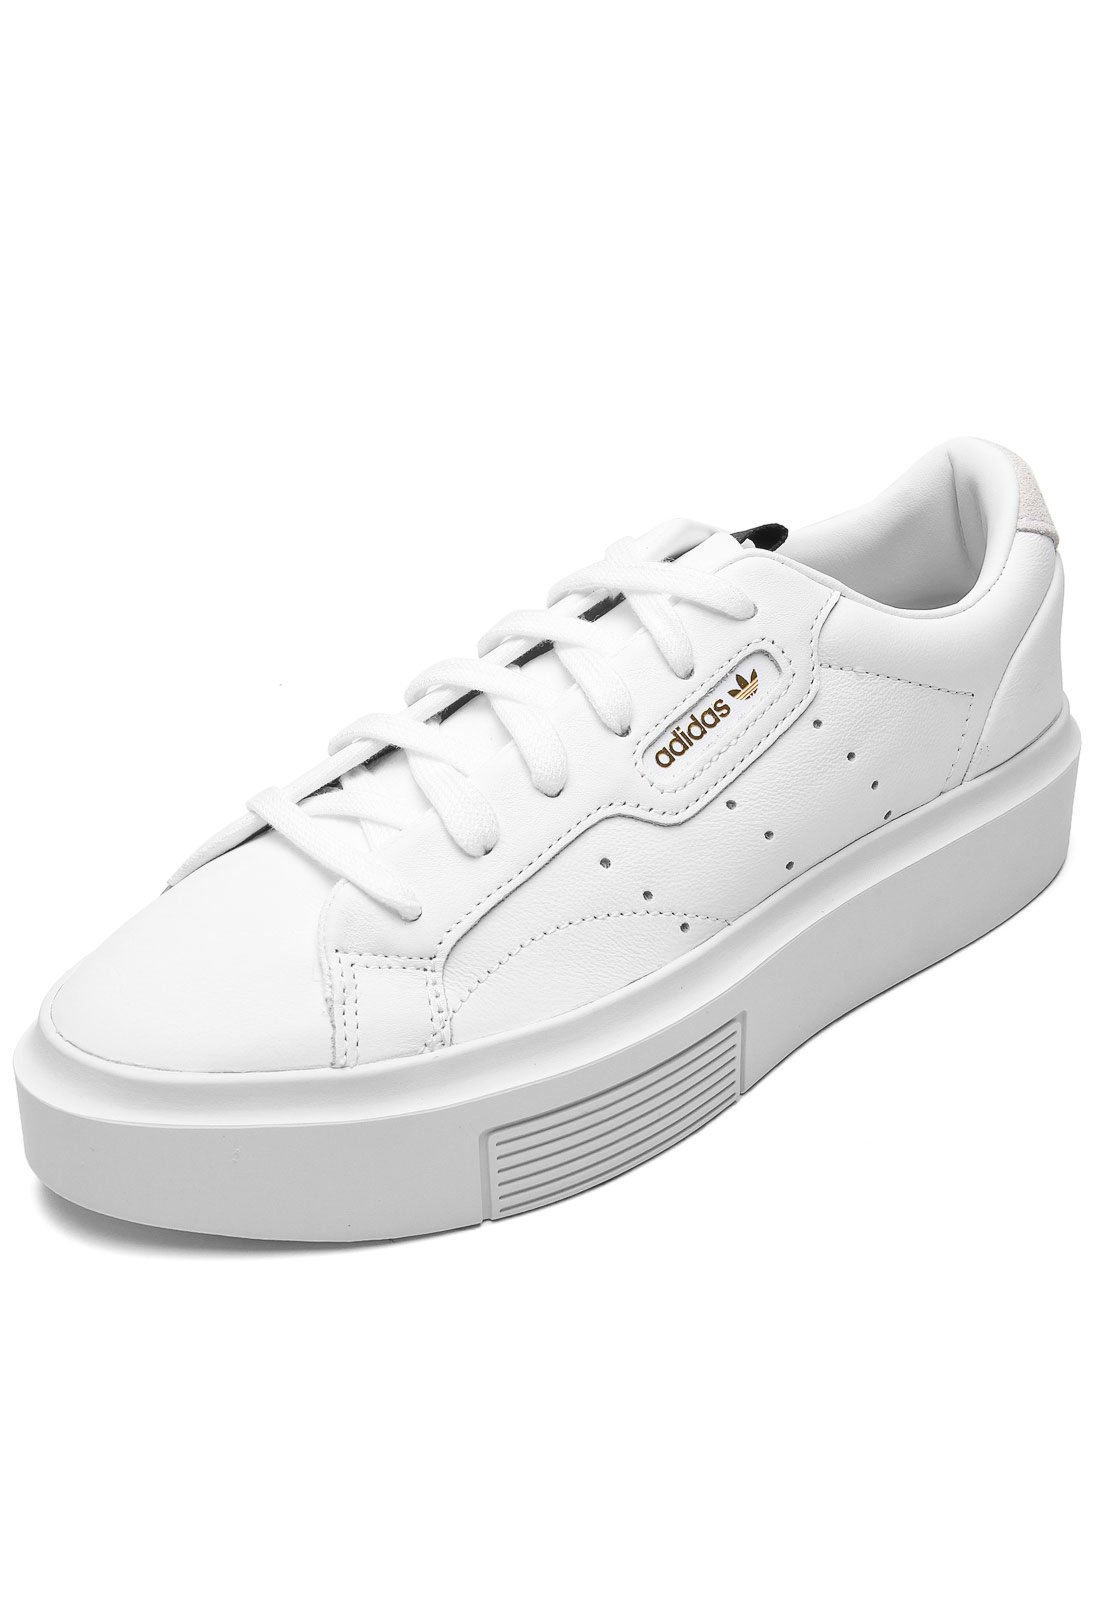 tenis adidas sleek branco